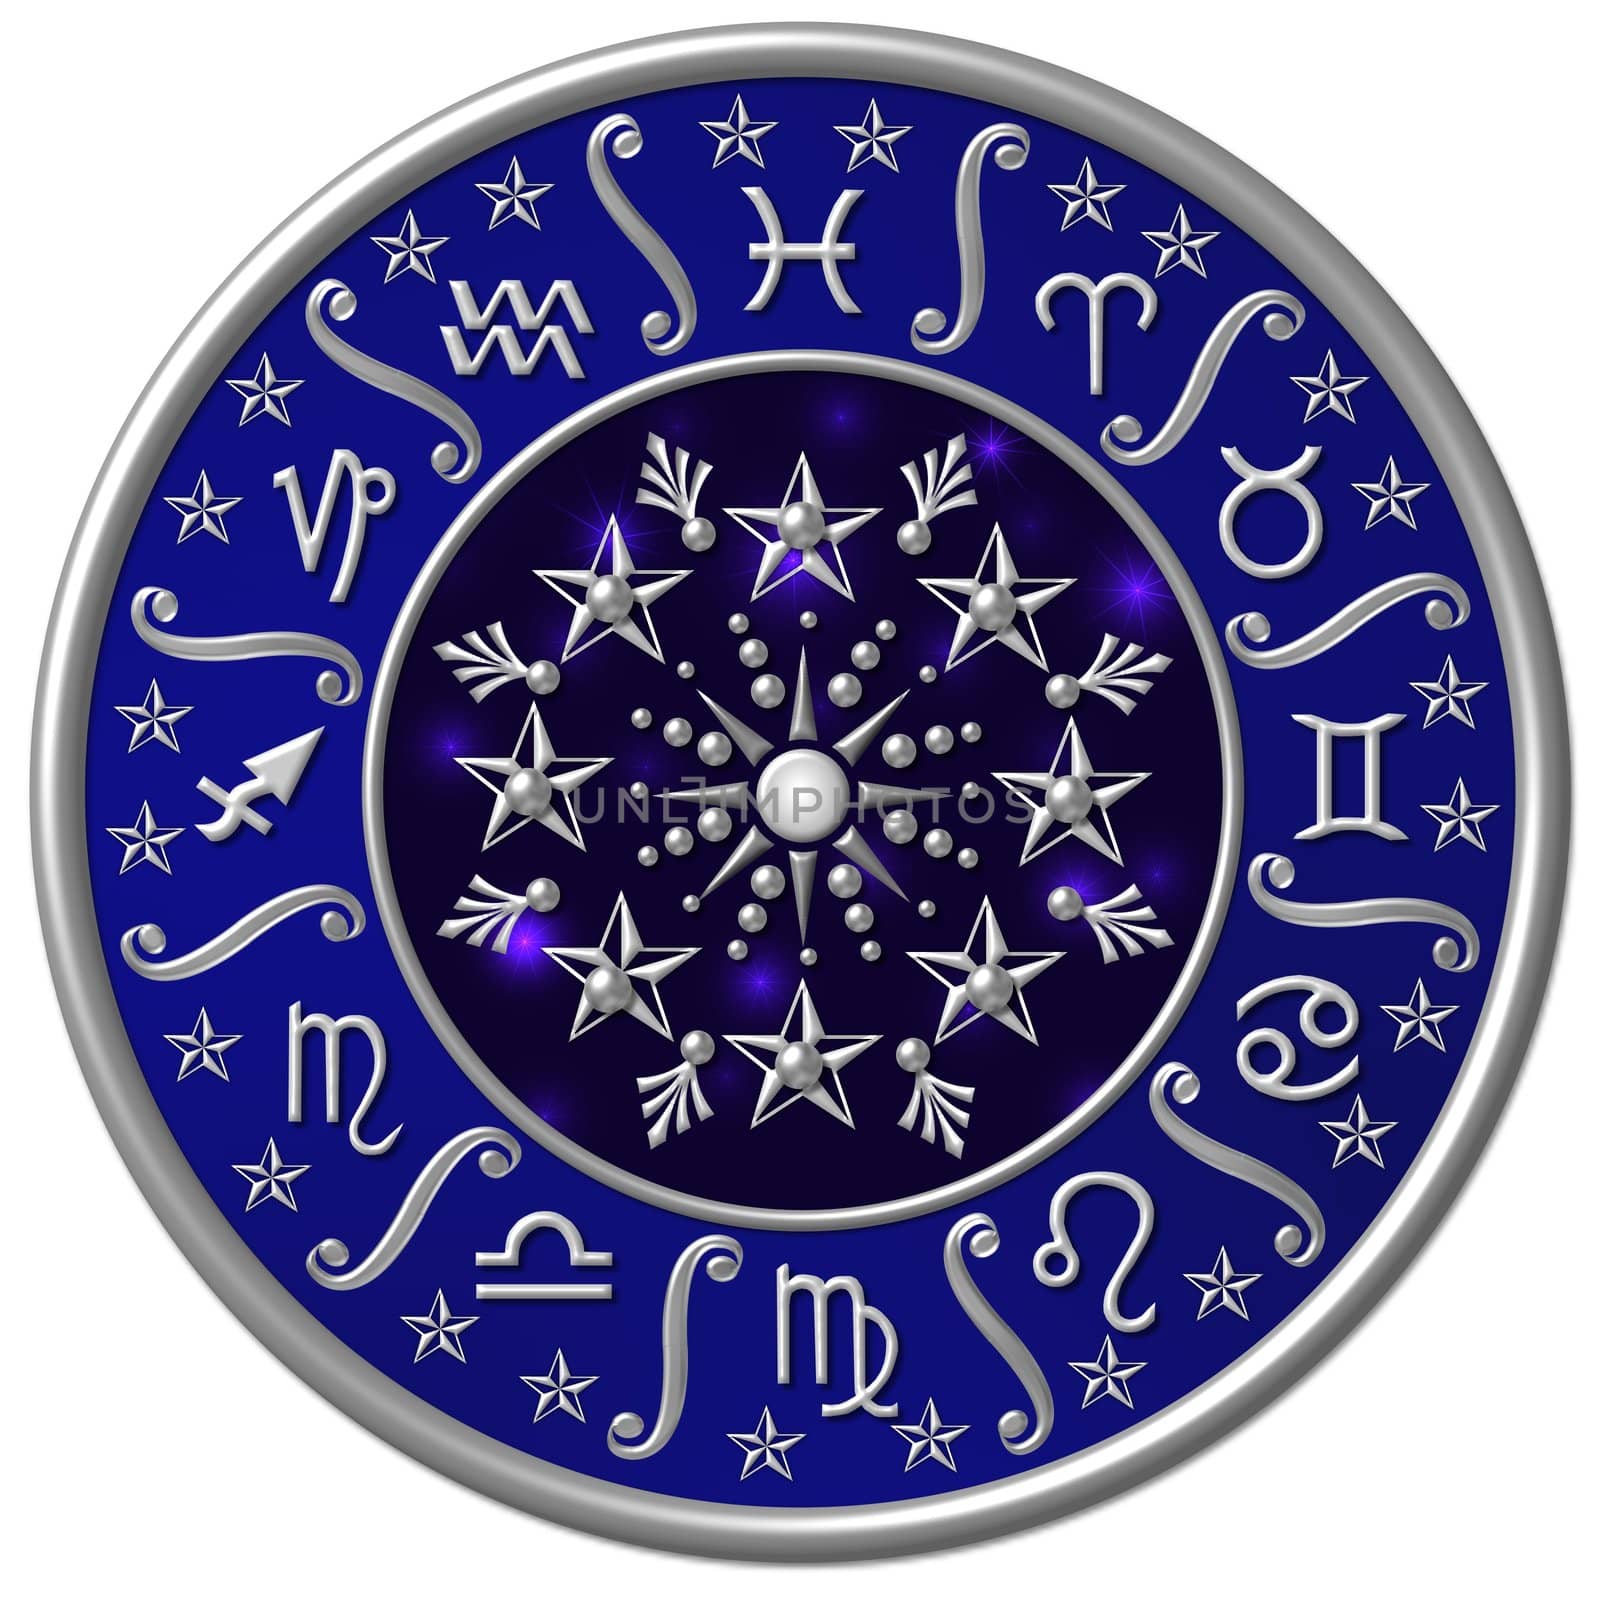 Zodiac - horoscope blue design - constellation by peromarketing